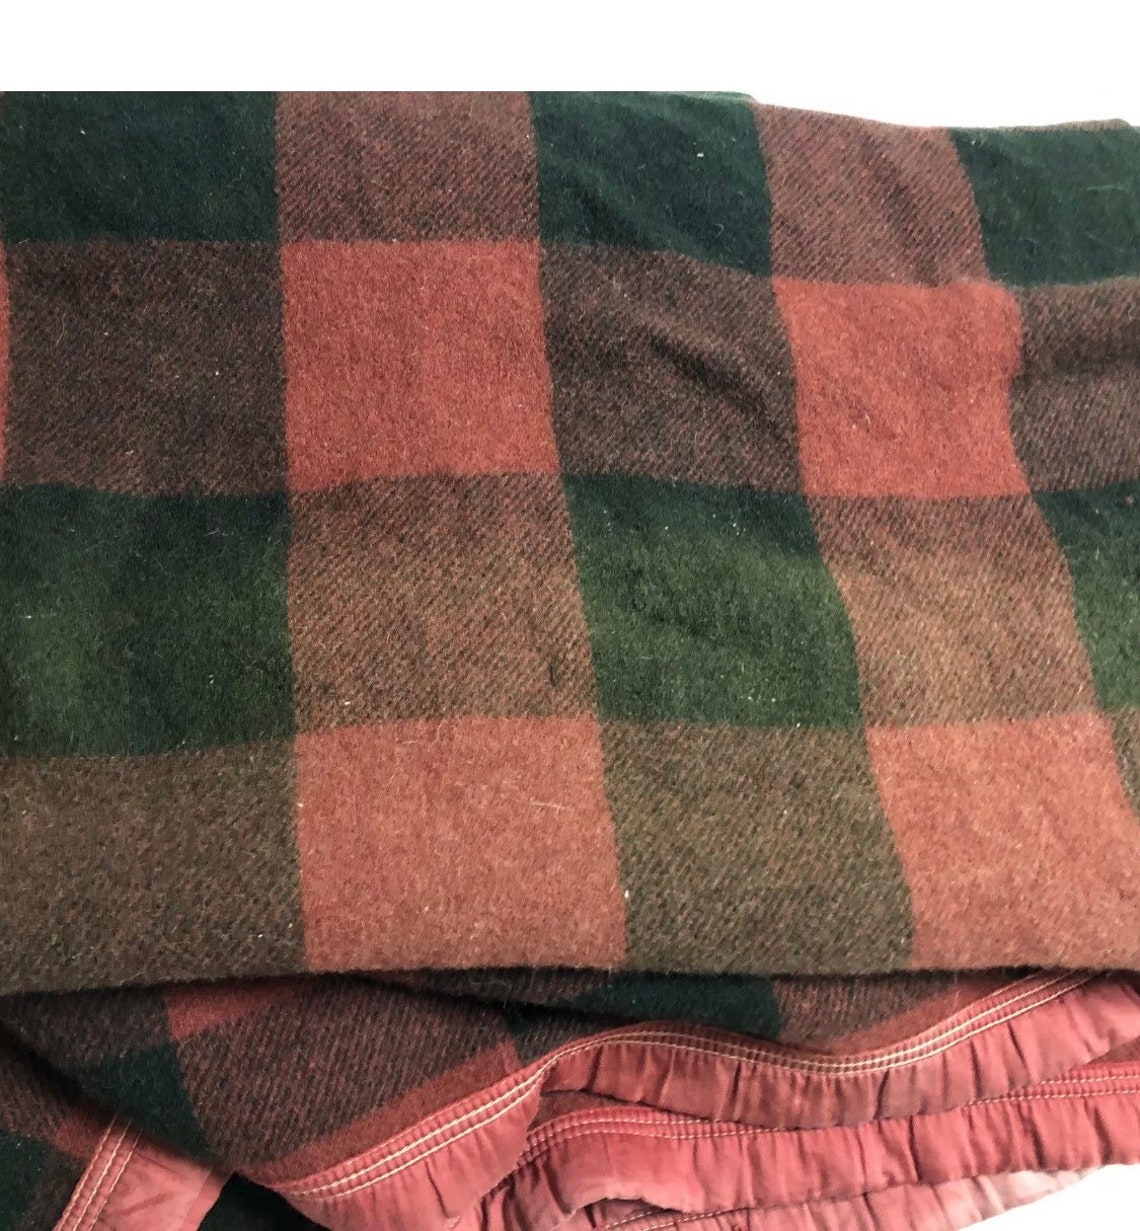 Buffalo Plaid Wool Blanket 140 L x 59 W Heavy Holes Used | Etsy